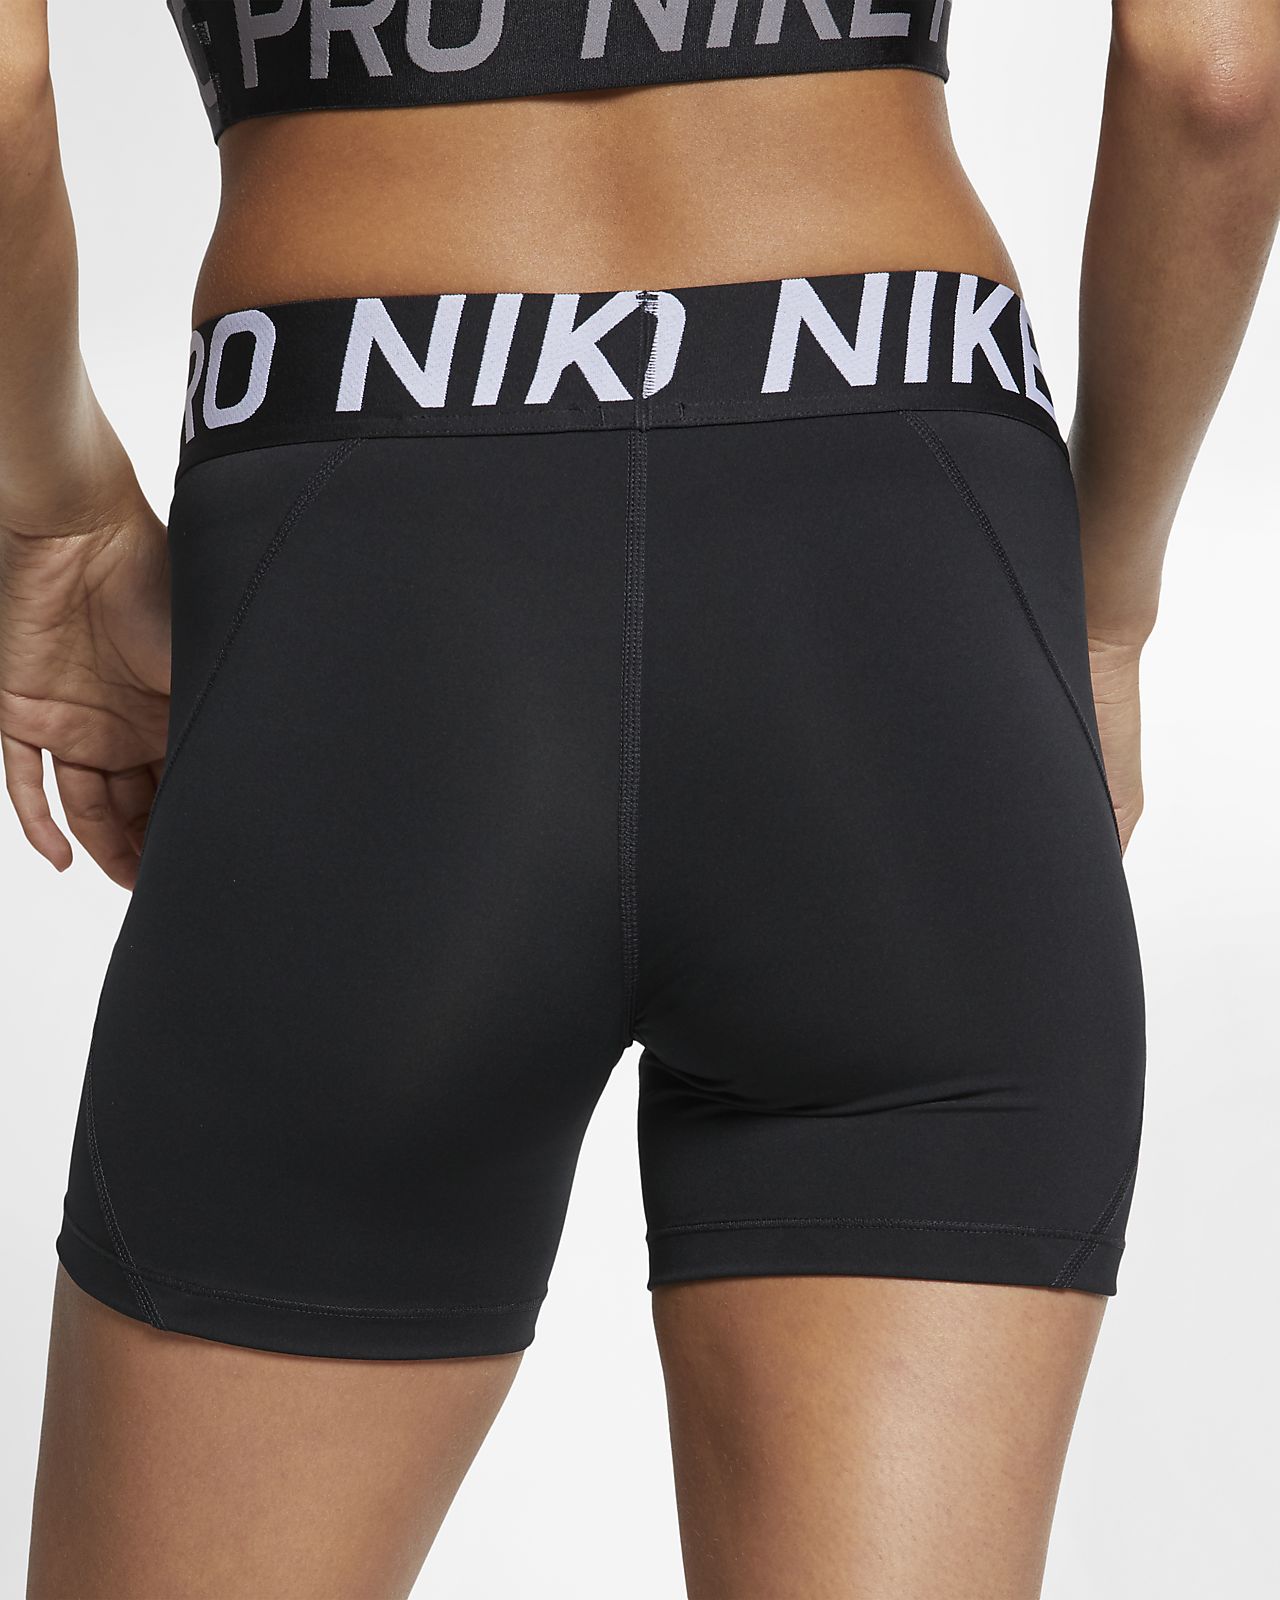 nike pro three inch shorts ladies